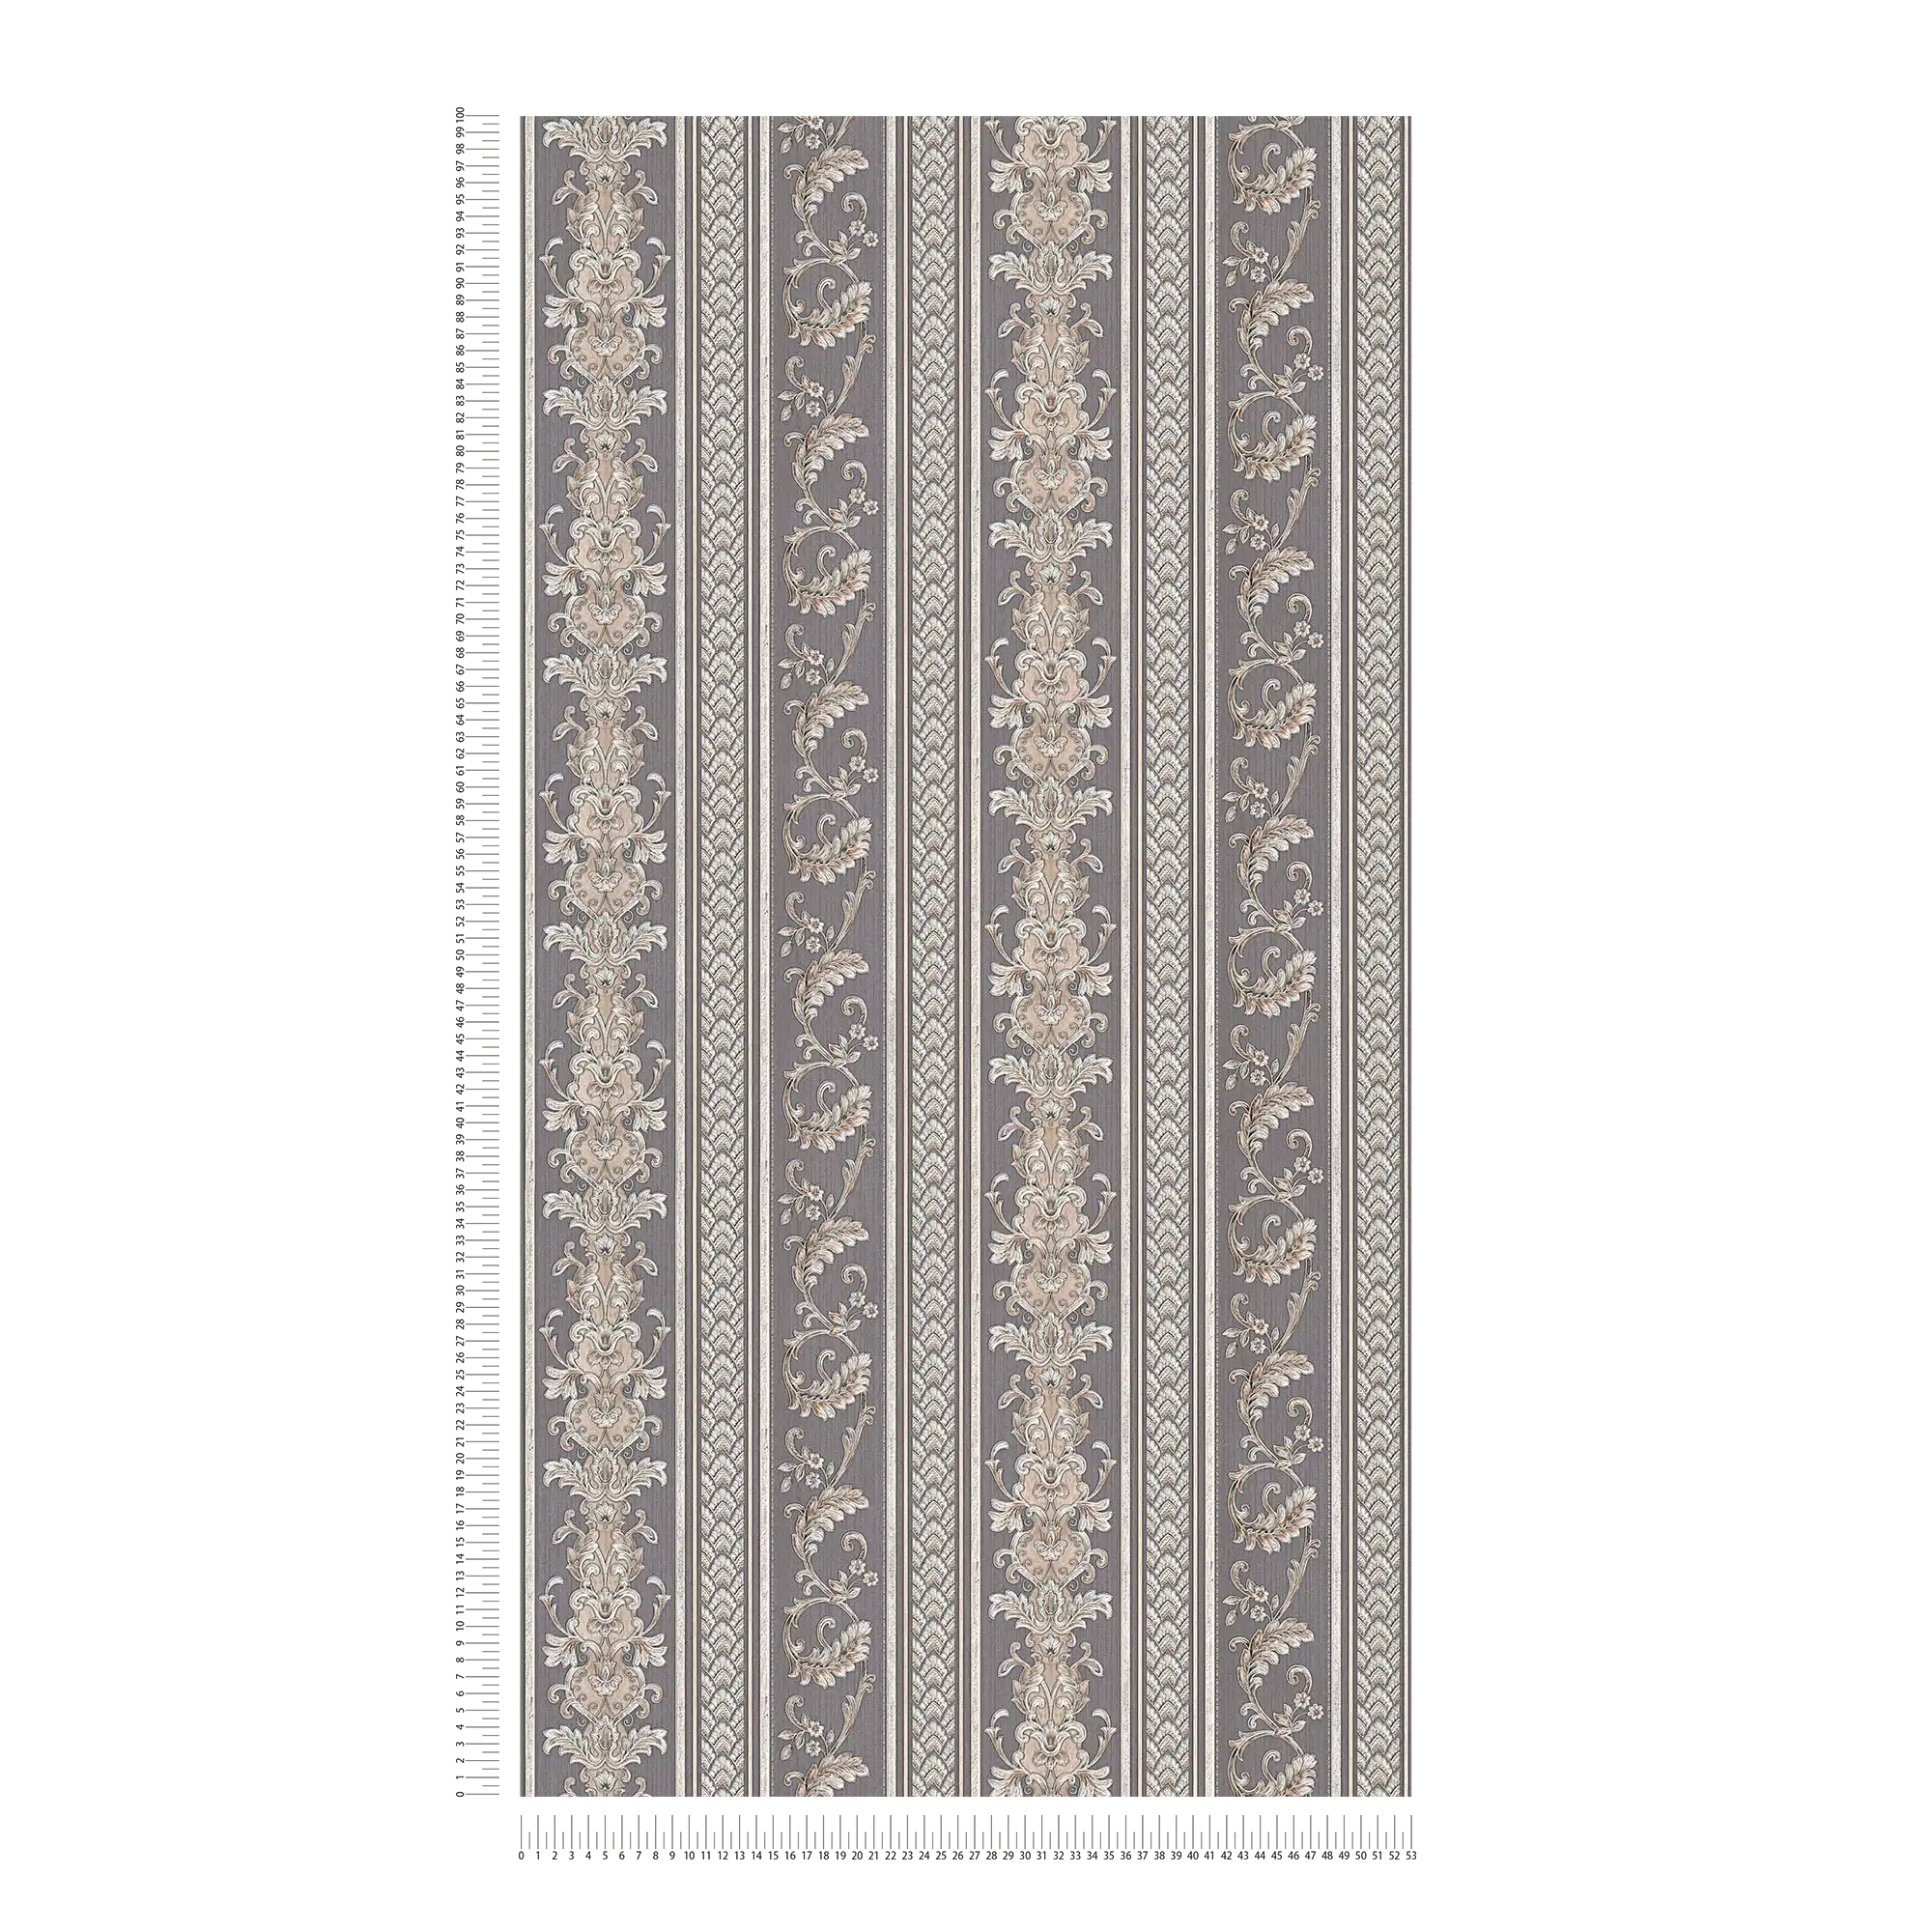             Ornament wallpaper metallic design with stripes - silver
        